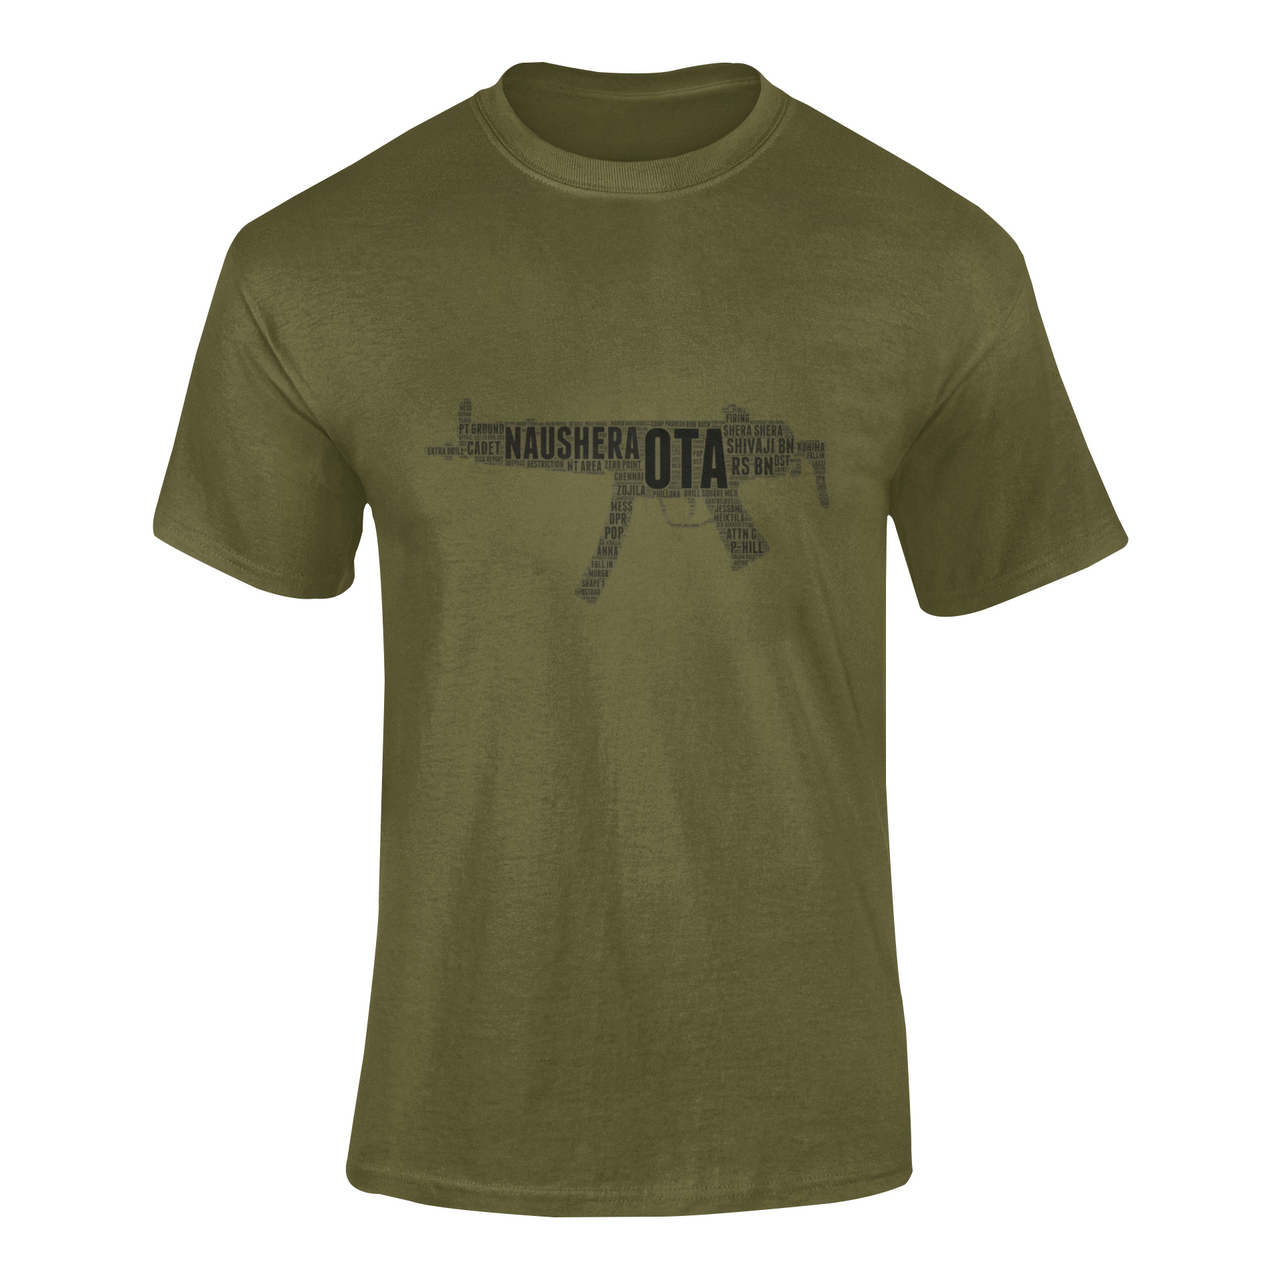 OTA T-shirt - Word Cloud Naushera - MP5 (Men)